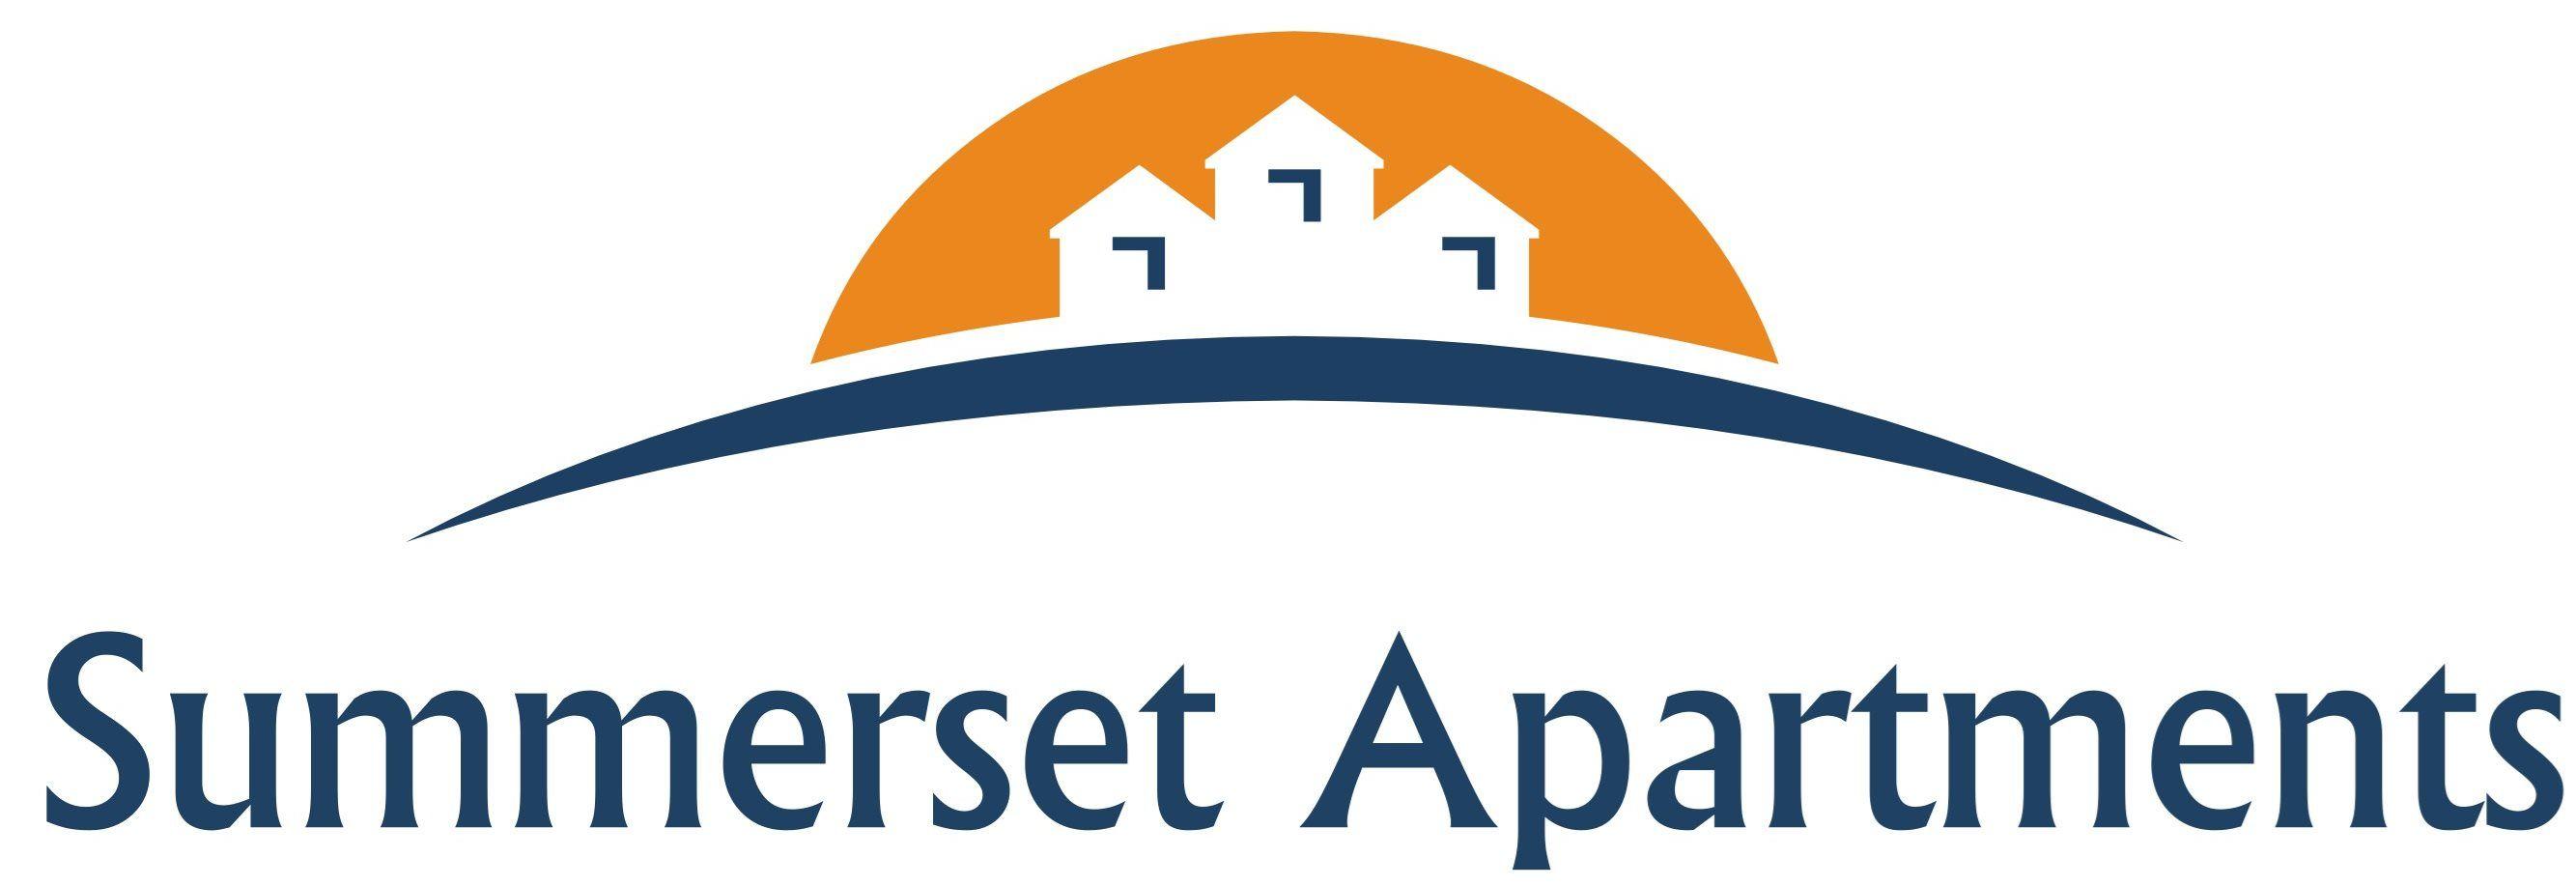 Apartments Logo - Summerset Apartments | Apartments in Zephyrhills, FL